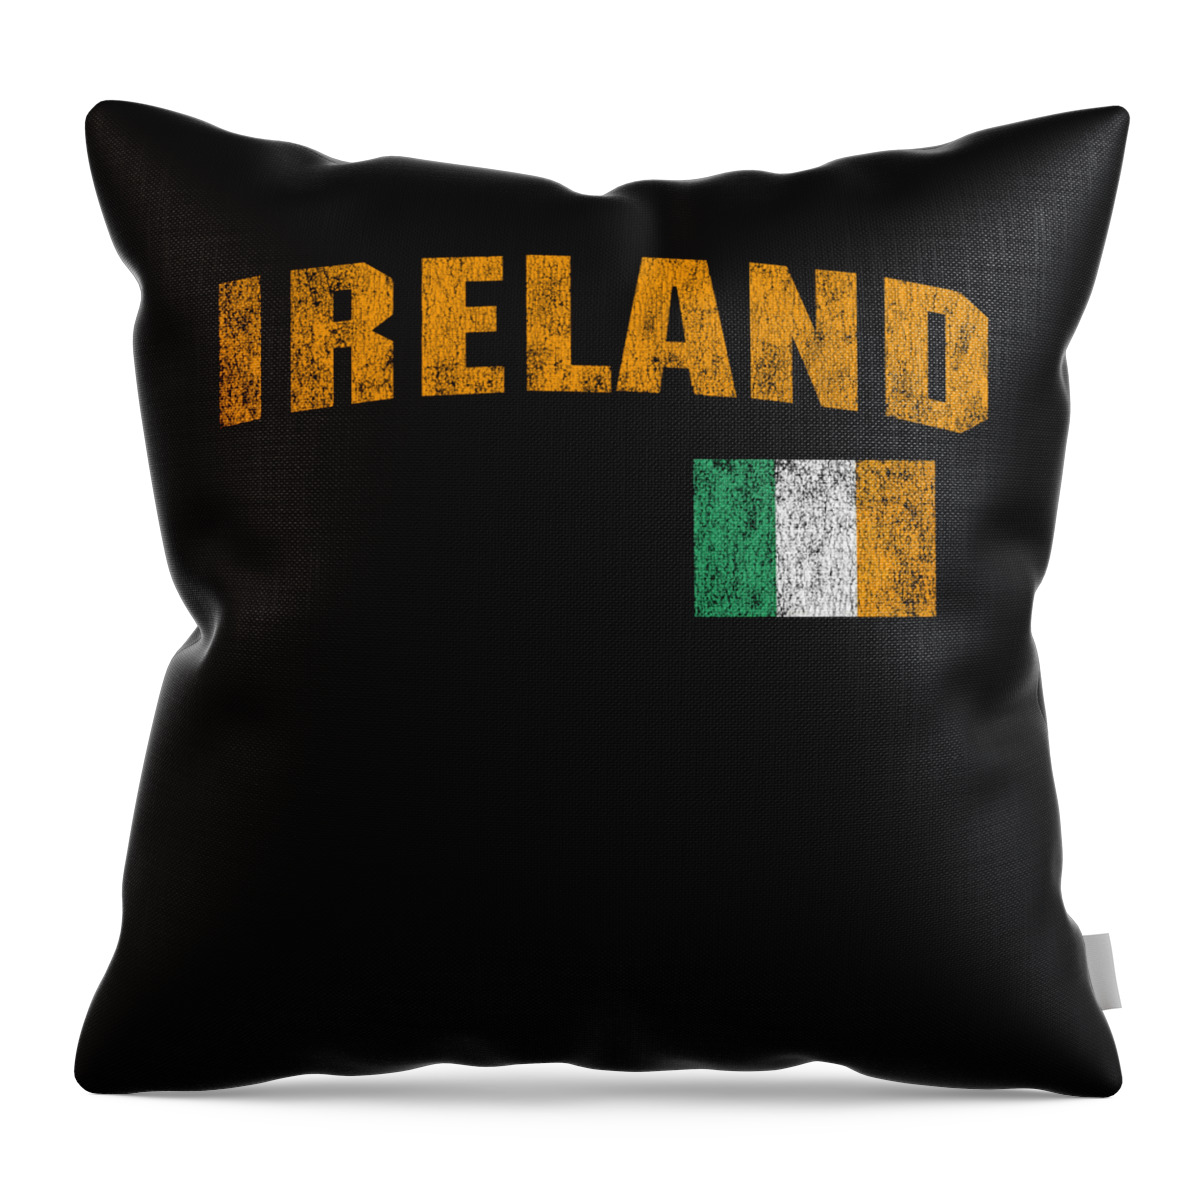 Ireland Throw Pillow featuring the digital art Ireland Retro by Flippin Sweet Gear